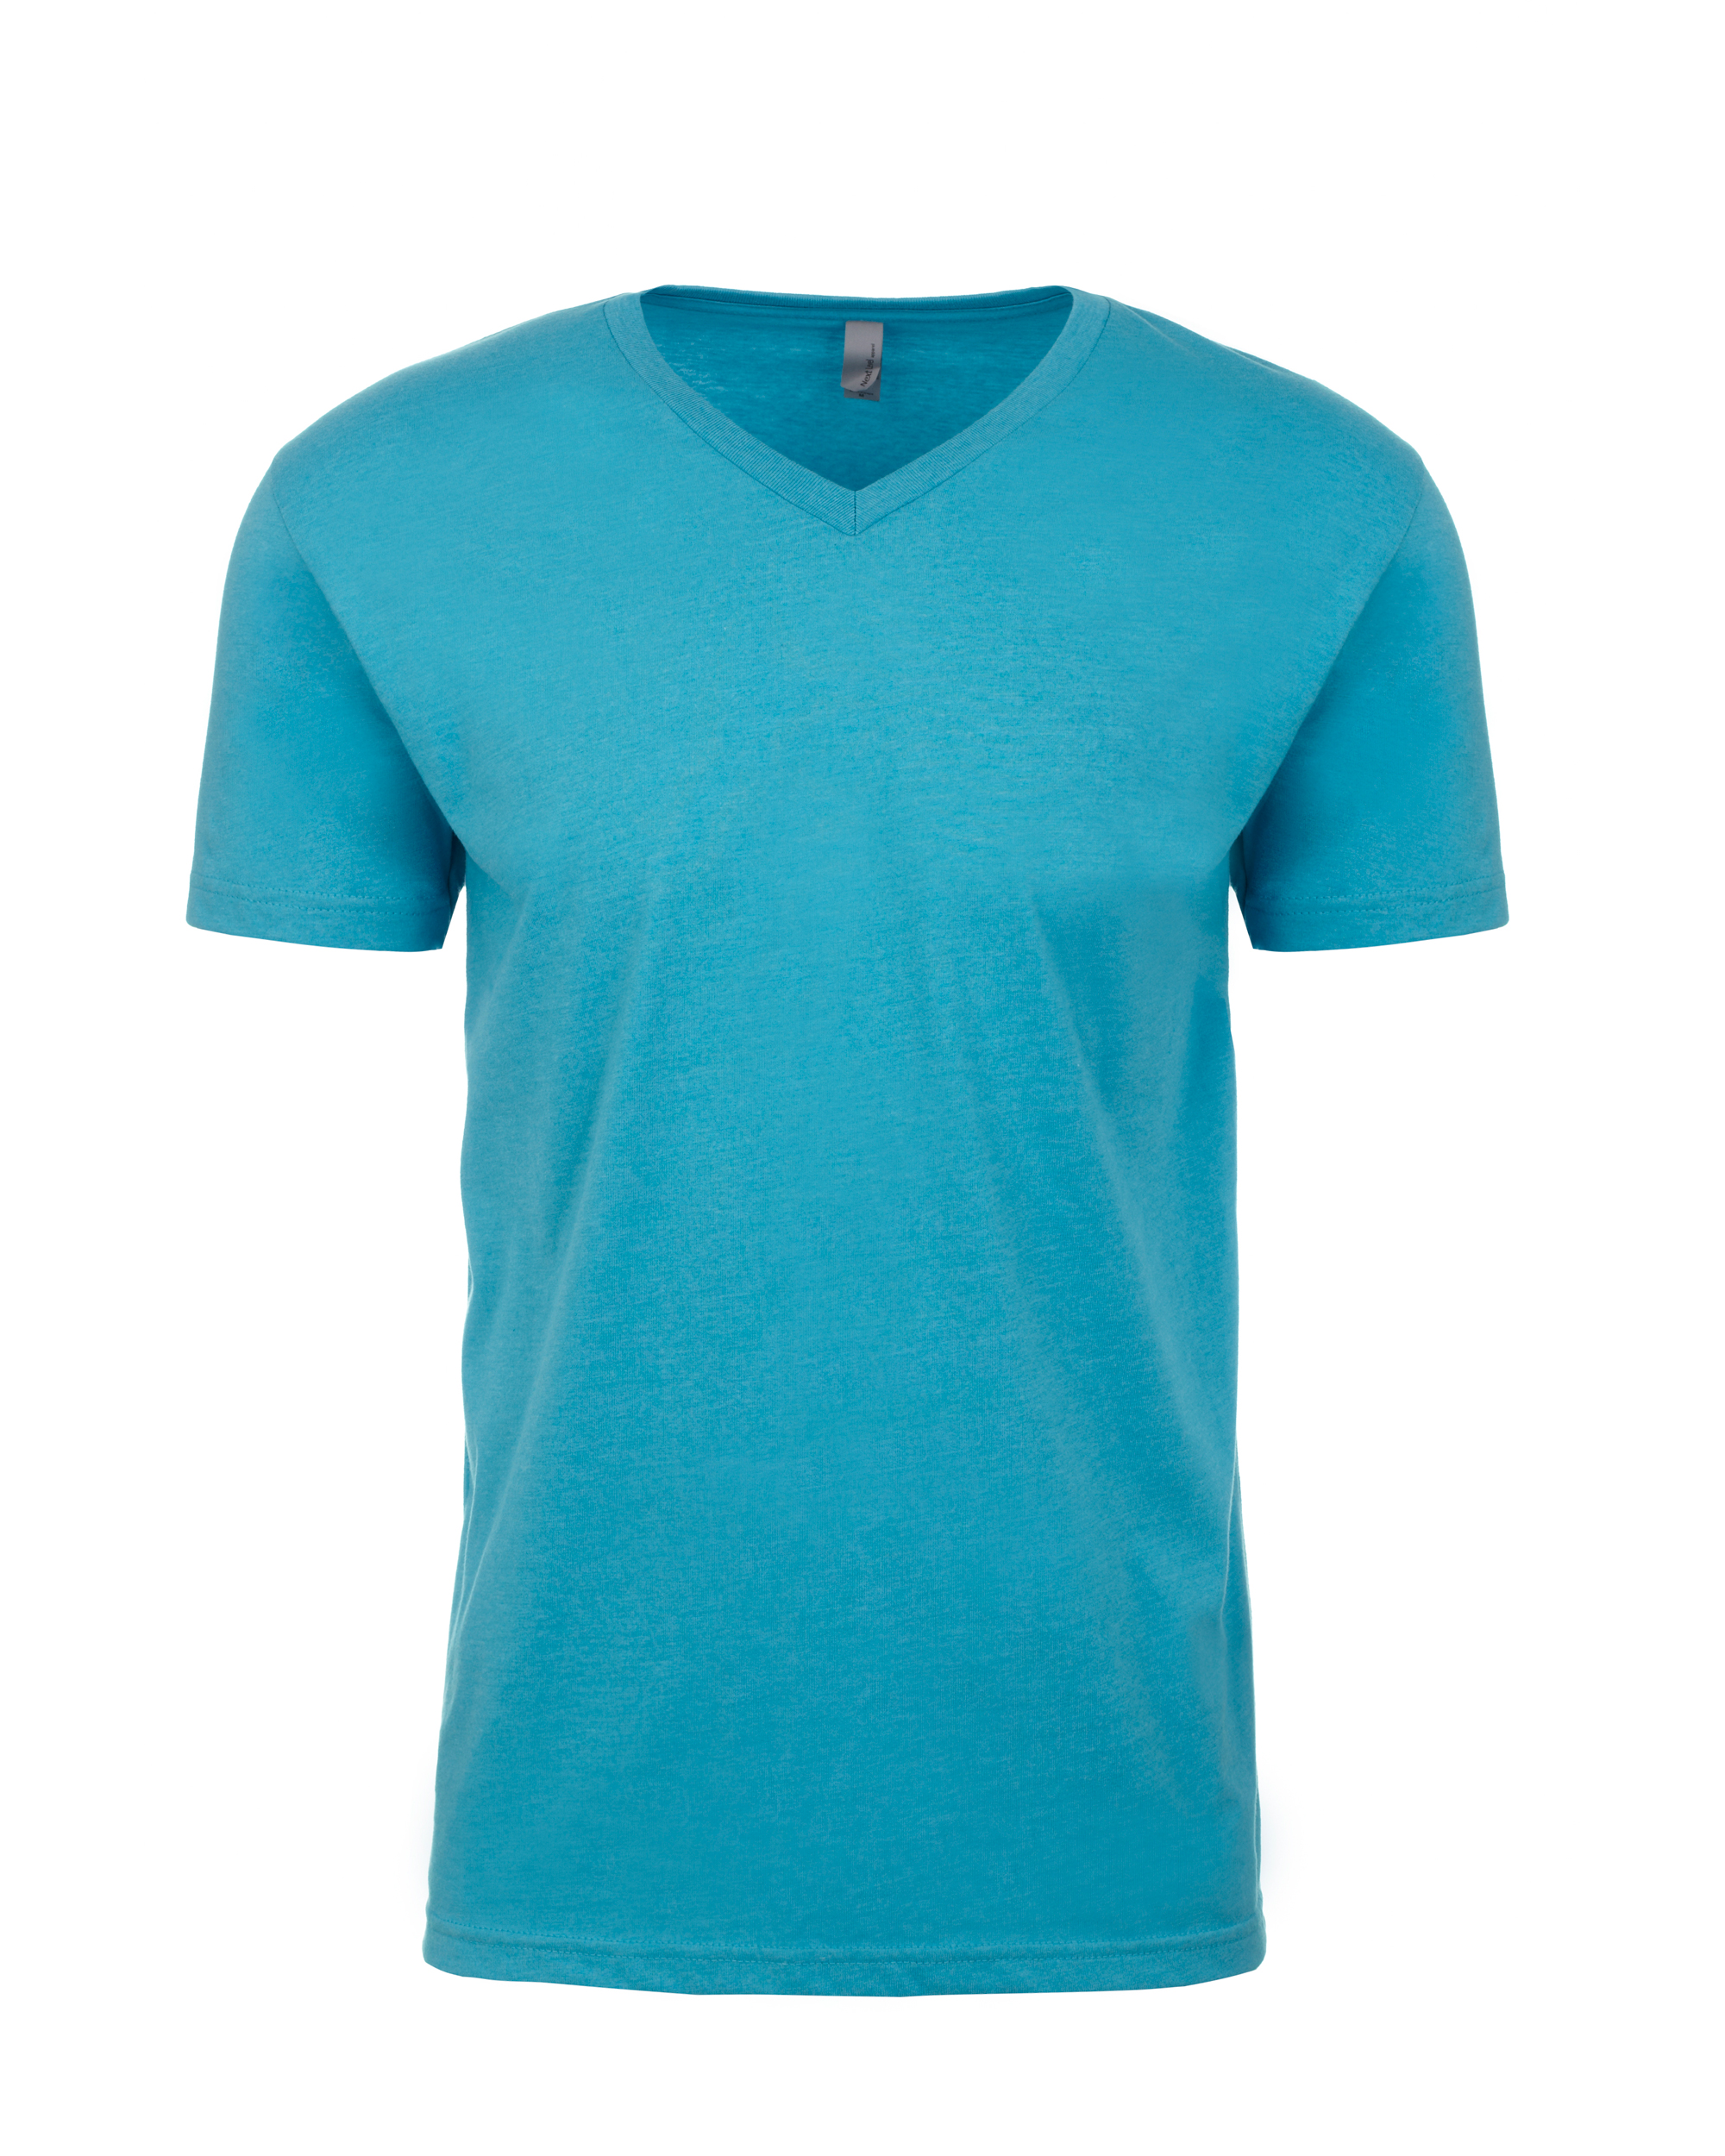 Next Level Apparel® 6240 Unisex CVC V-Neck T-Shirt